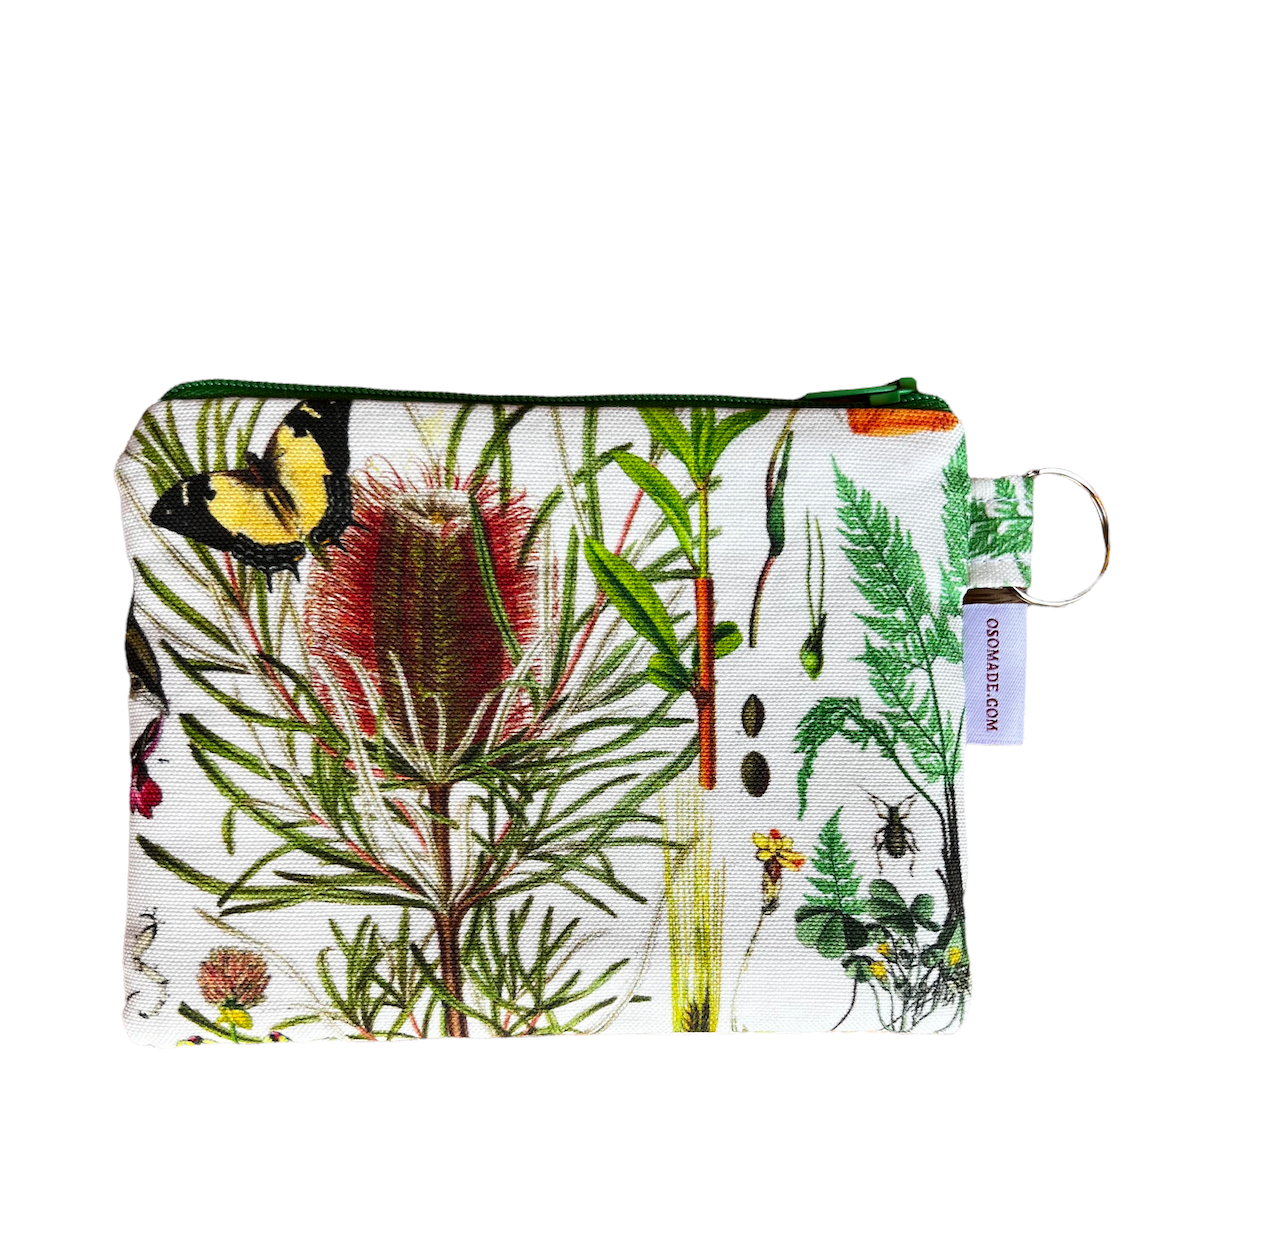 Botanical coin purse, naturalist inspired pouch, 6"x4.5", linen and cotton, nylon zipper.